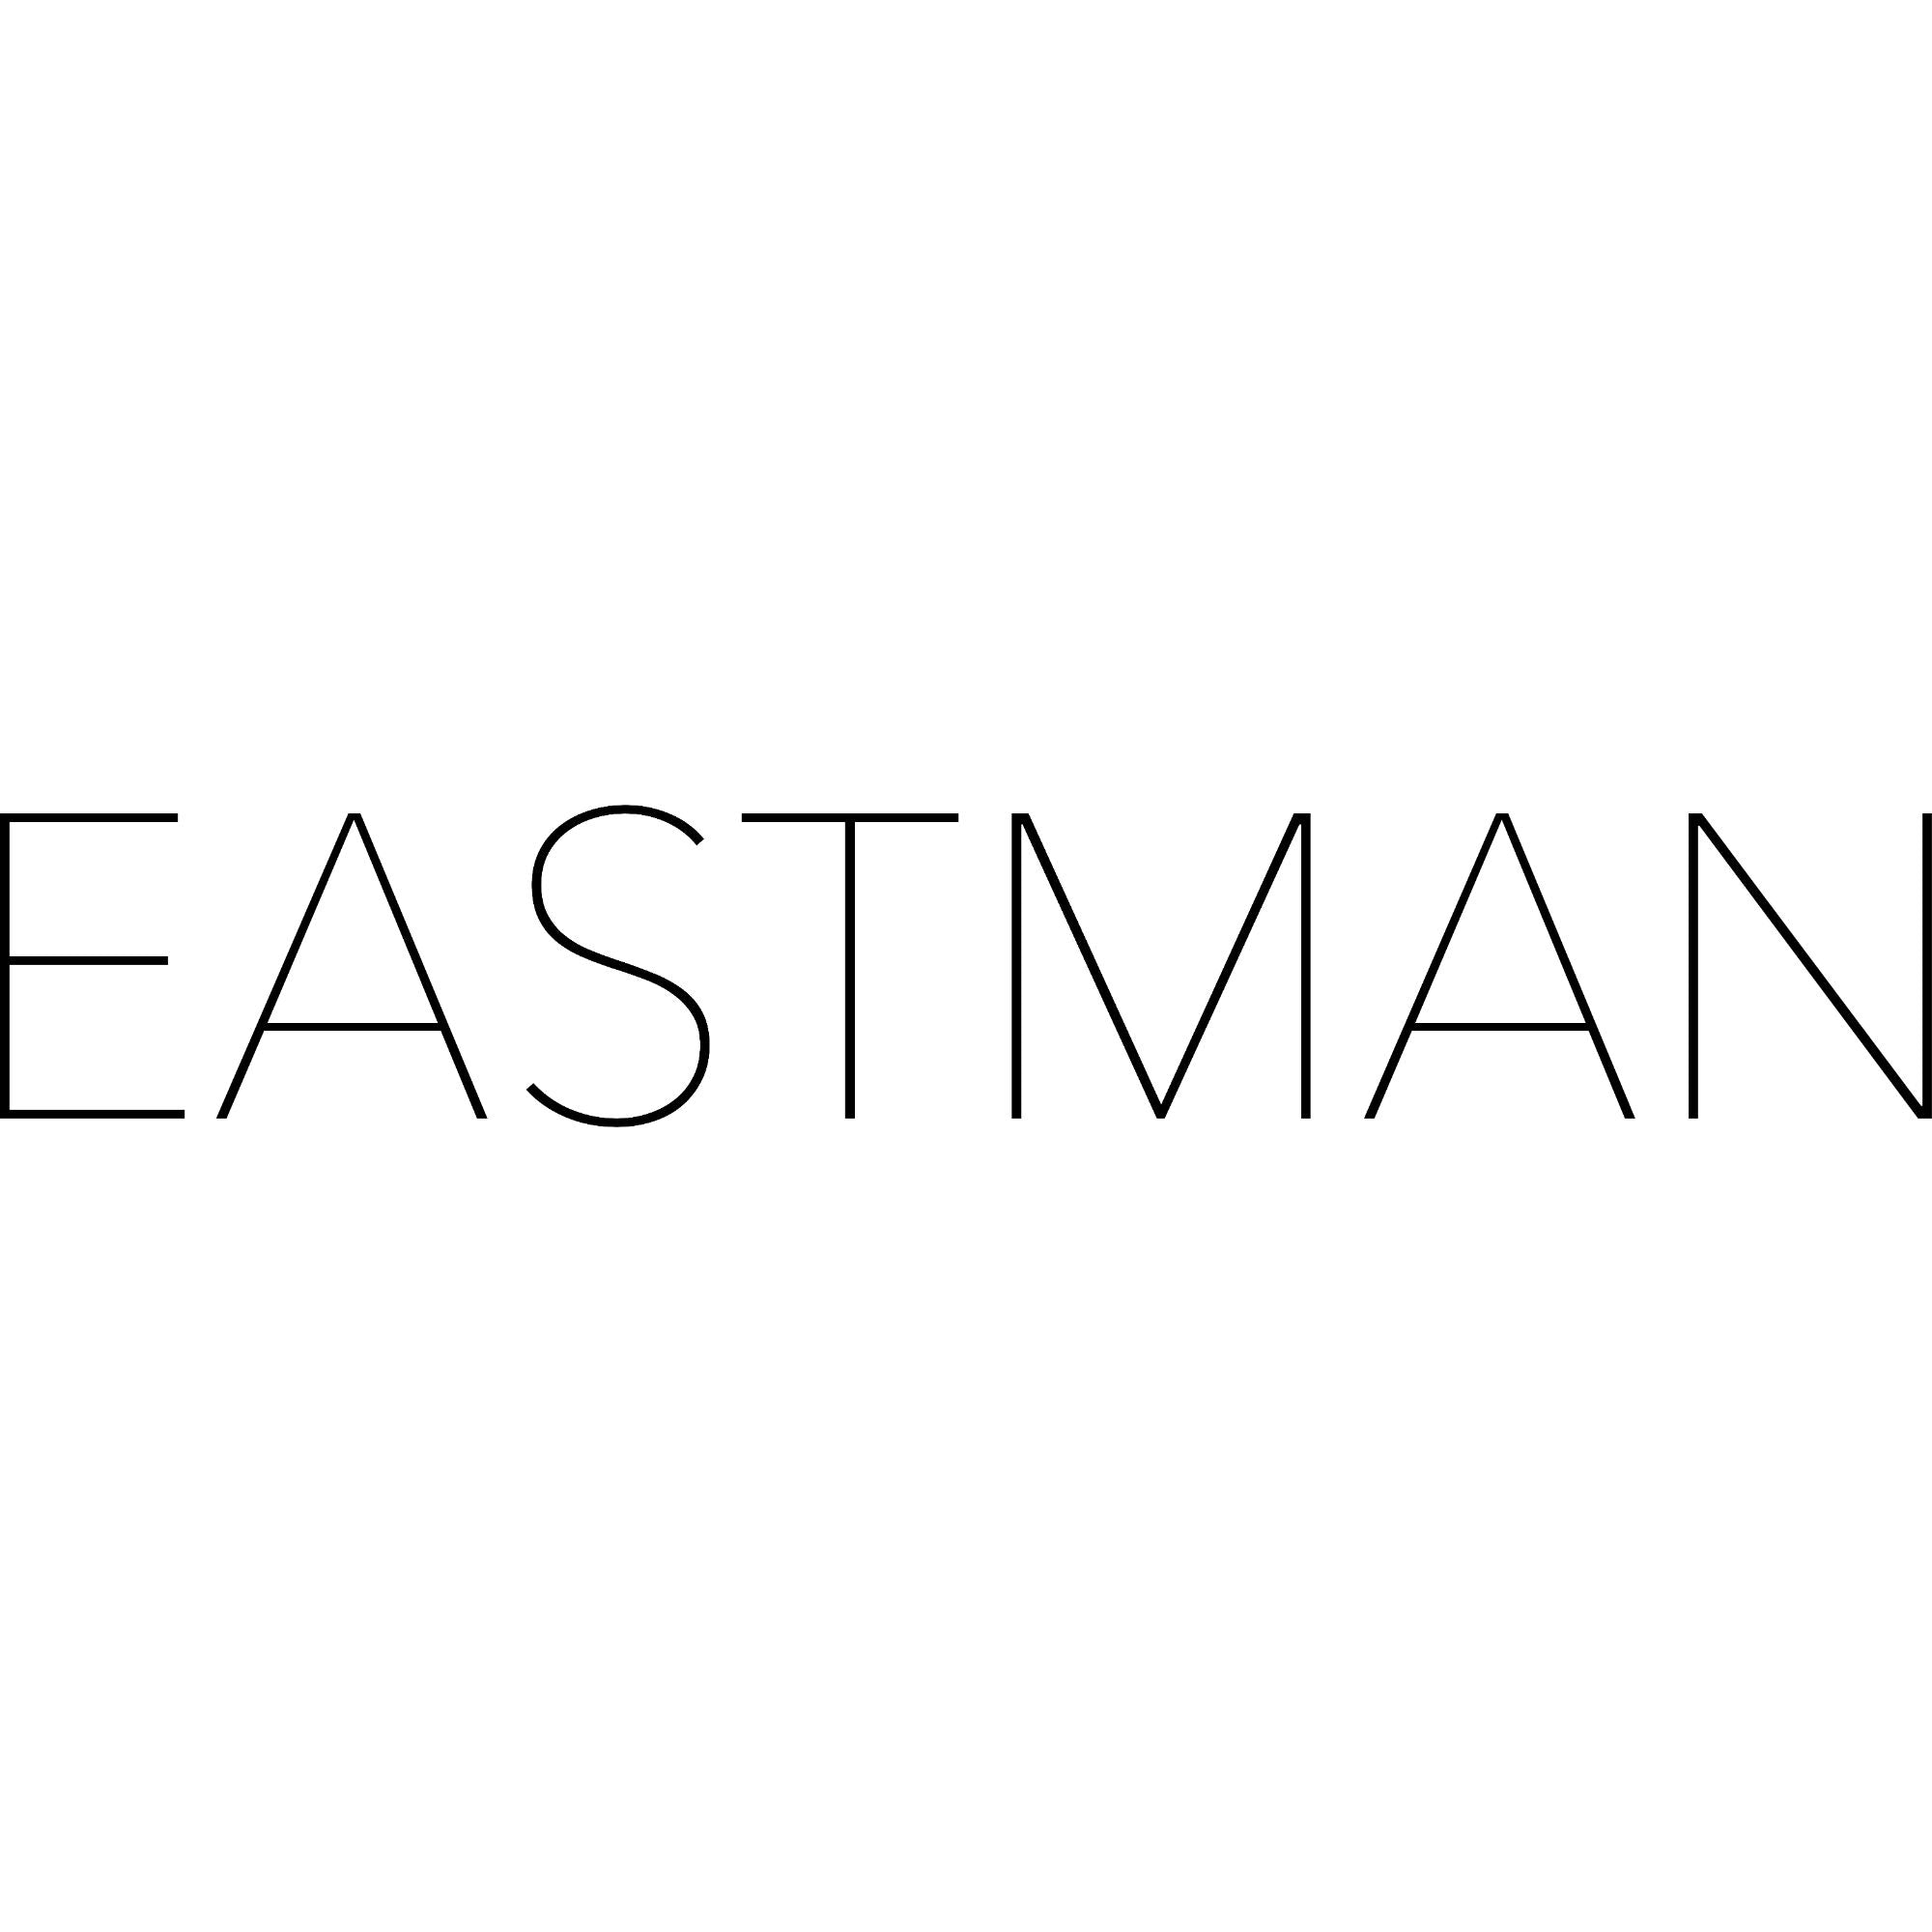 Eastman Guitars E2D Dreadnought Acoustic, Cedar